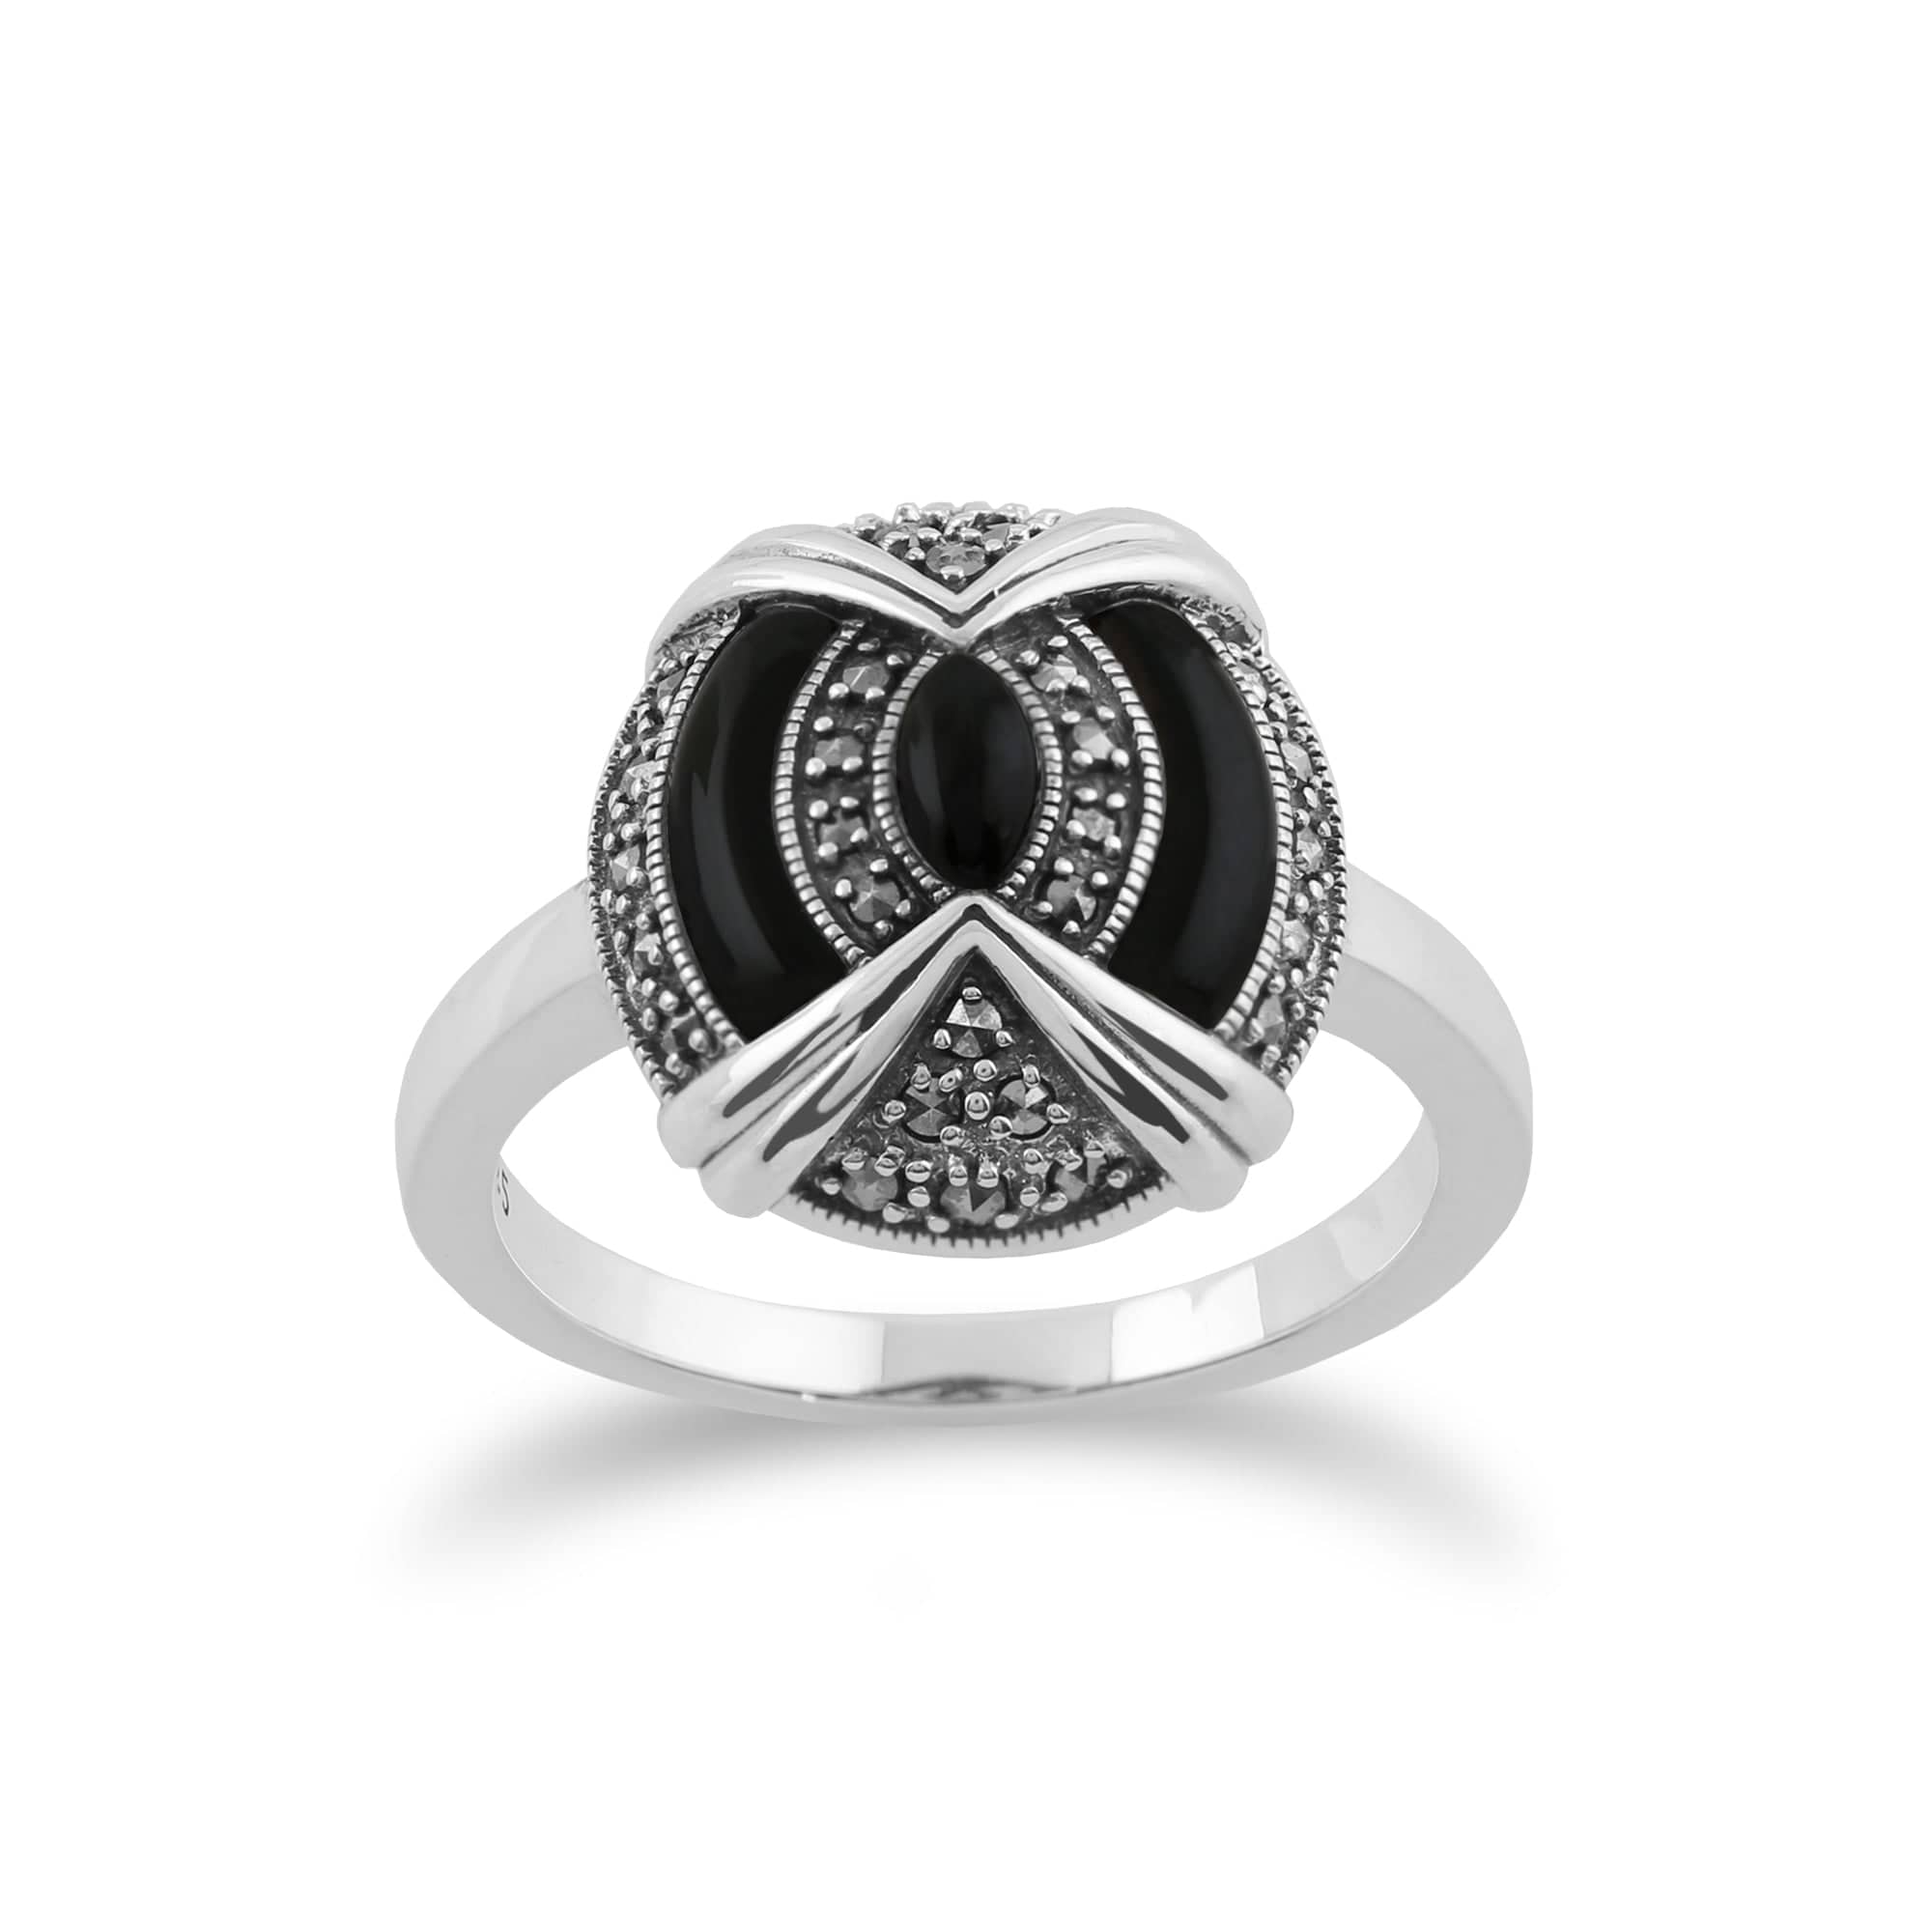 Gemondo 925 Sterling Silver Art Deco Black Onyx & Marcasite Ring Image 1